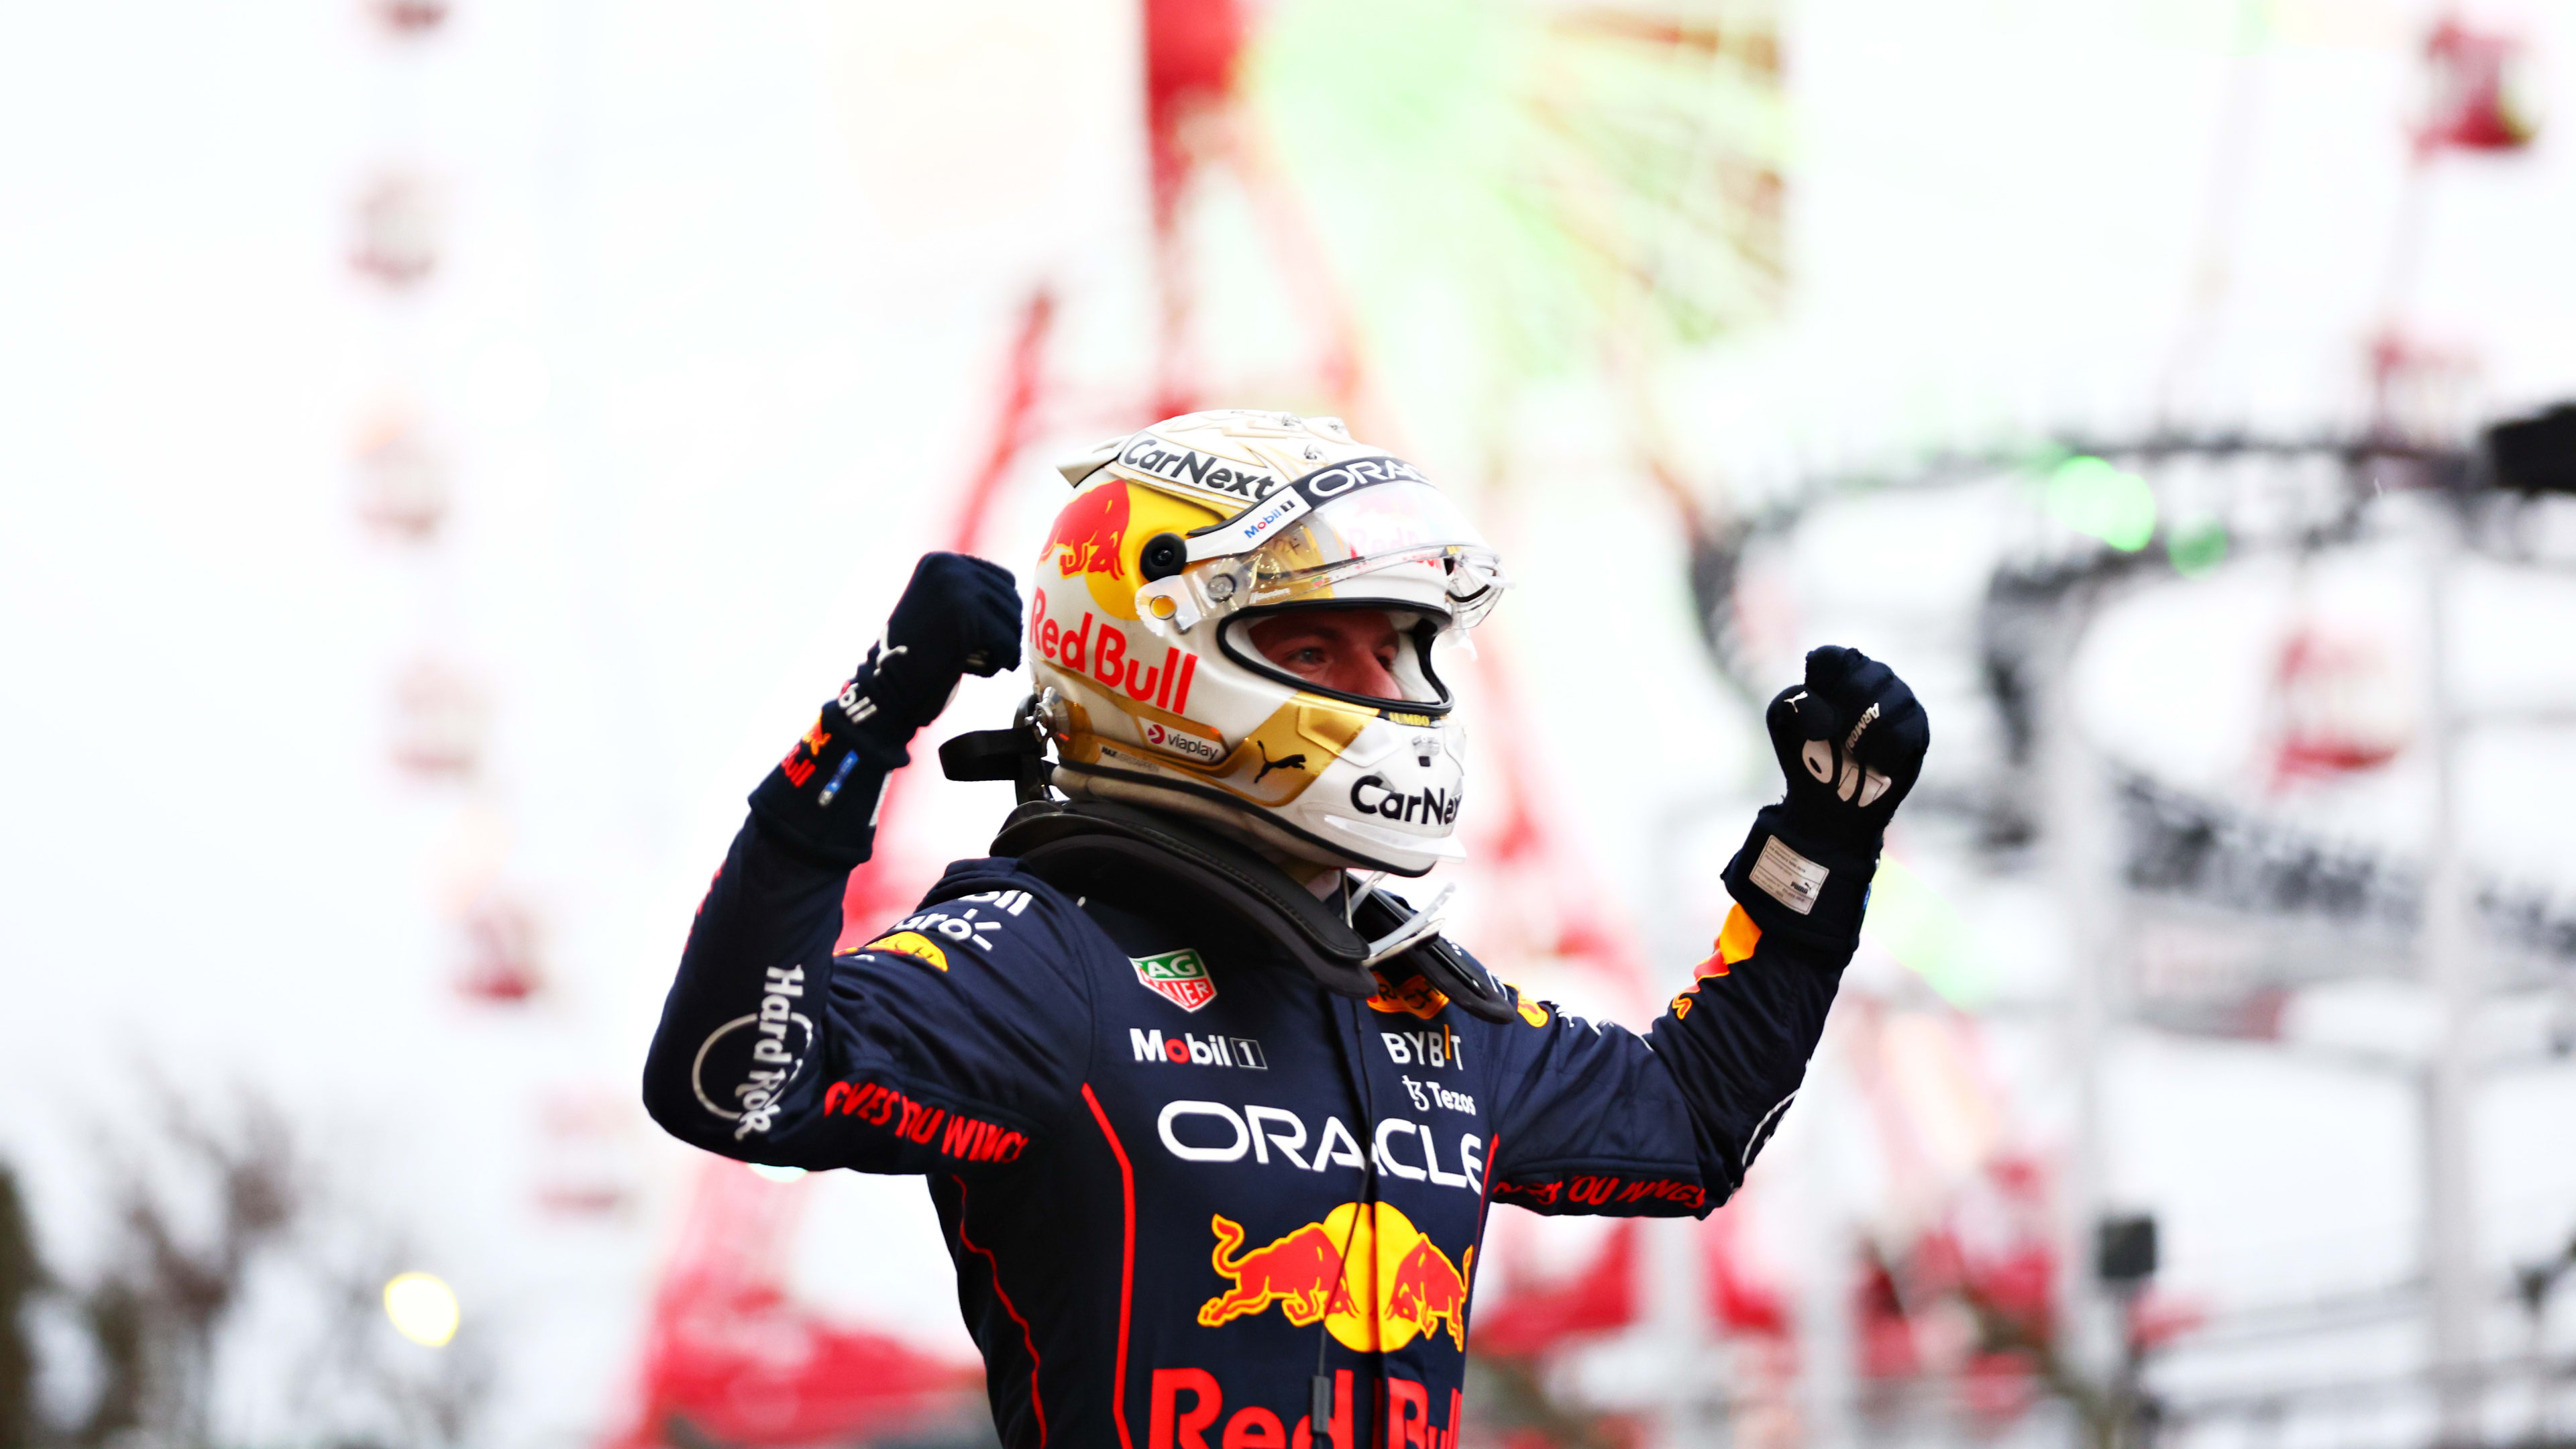 F1: Max Verstappen wins 2022 world championship after dramatic finish to  rain-hit Japanese Grand Prix